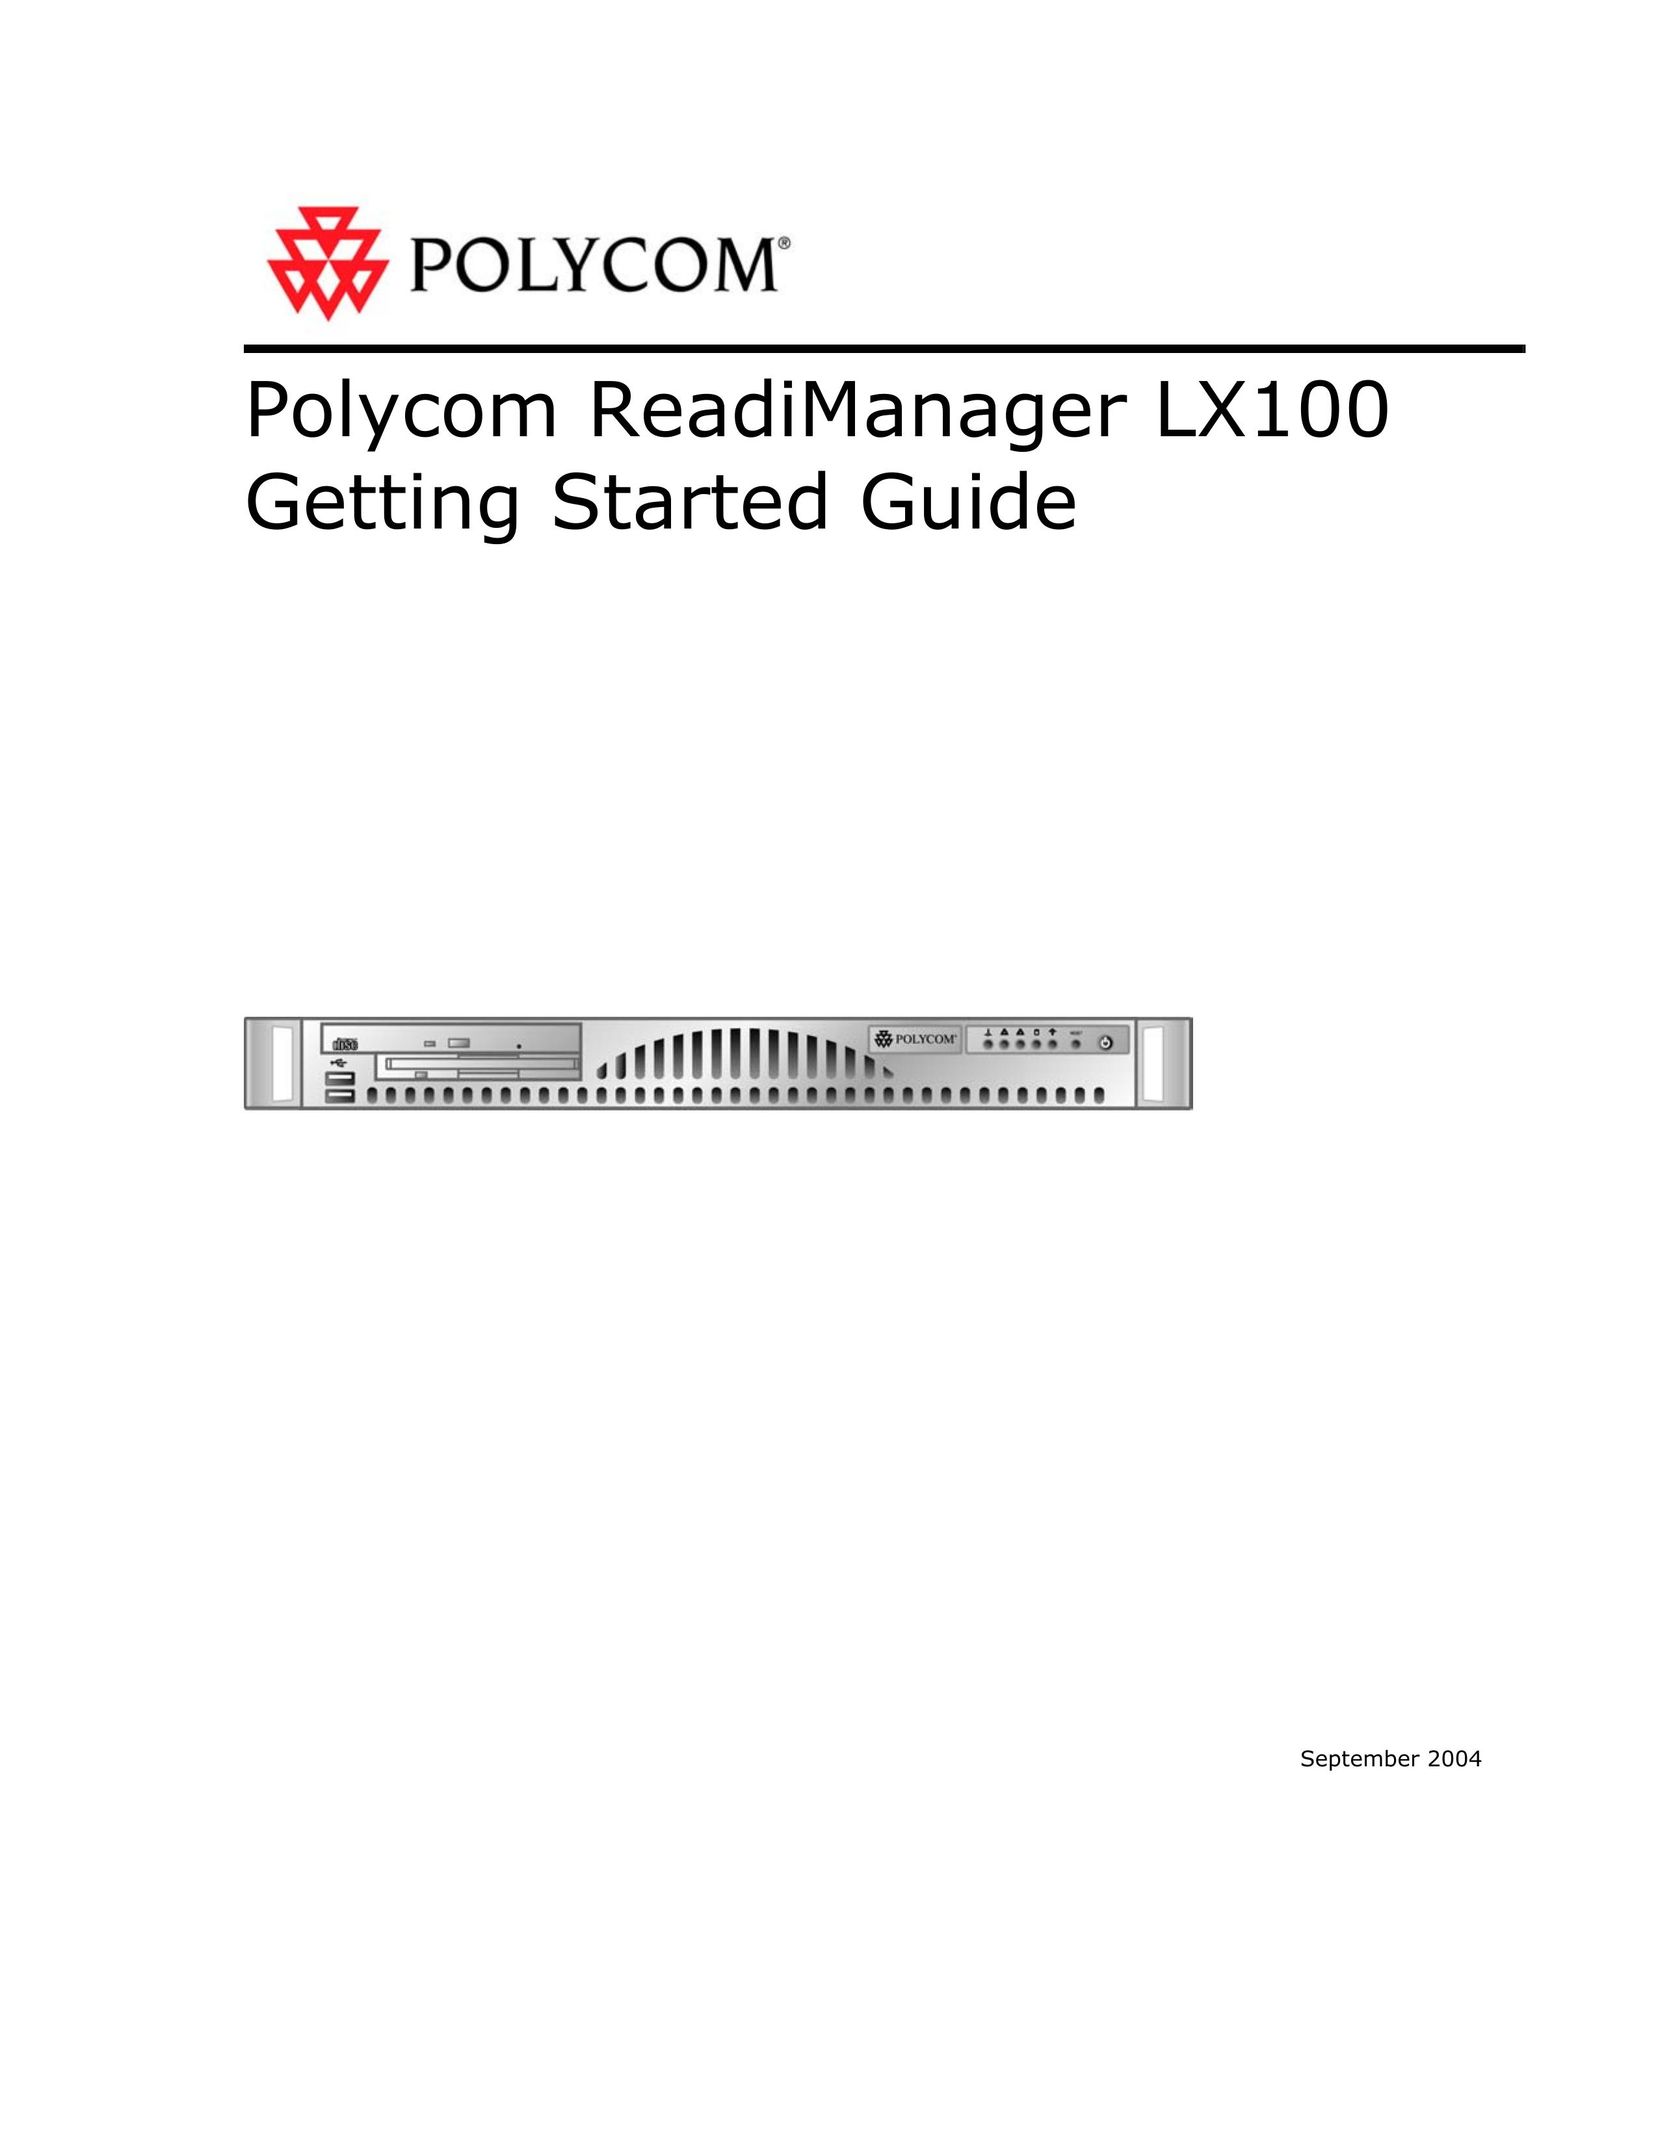 Polycom LX100 Microcassette Recorder User Manual